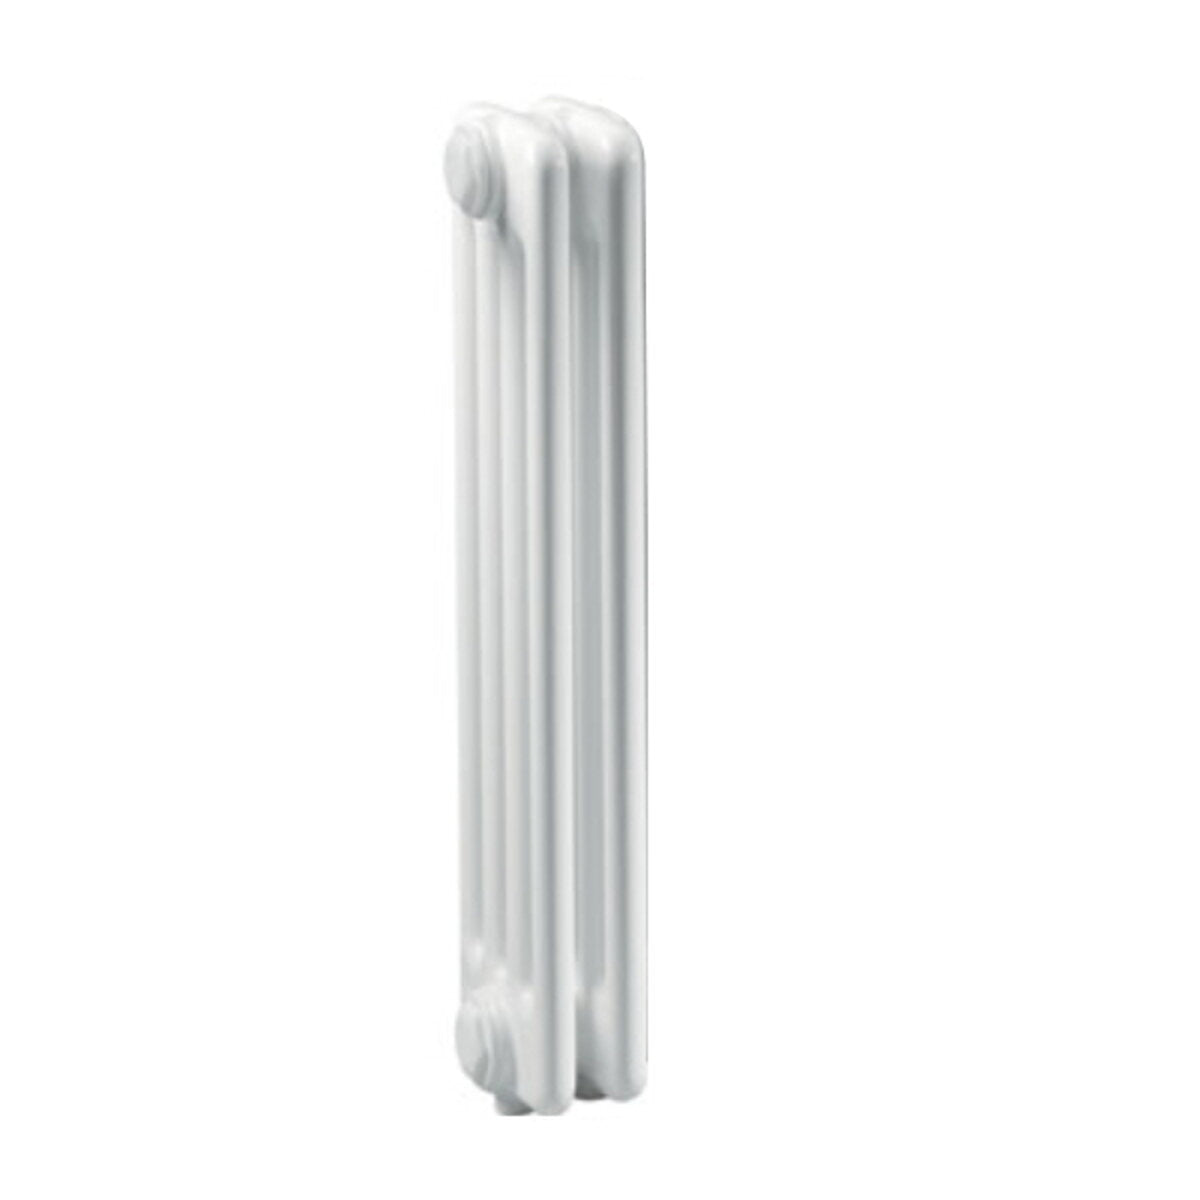 Ercos Comby steel column radiator 2 elements 3 columns center distance 1435 mm